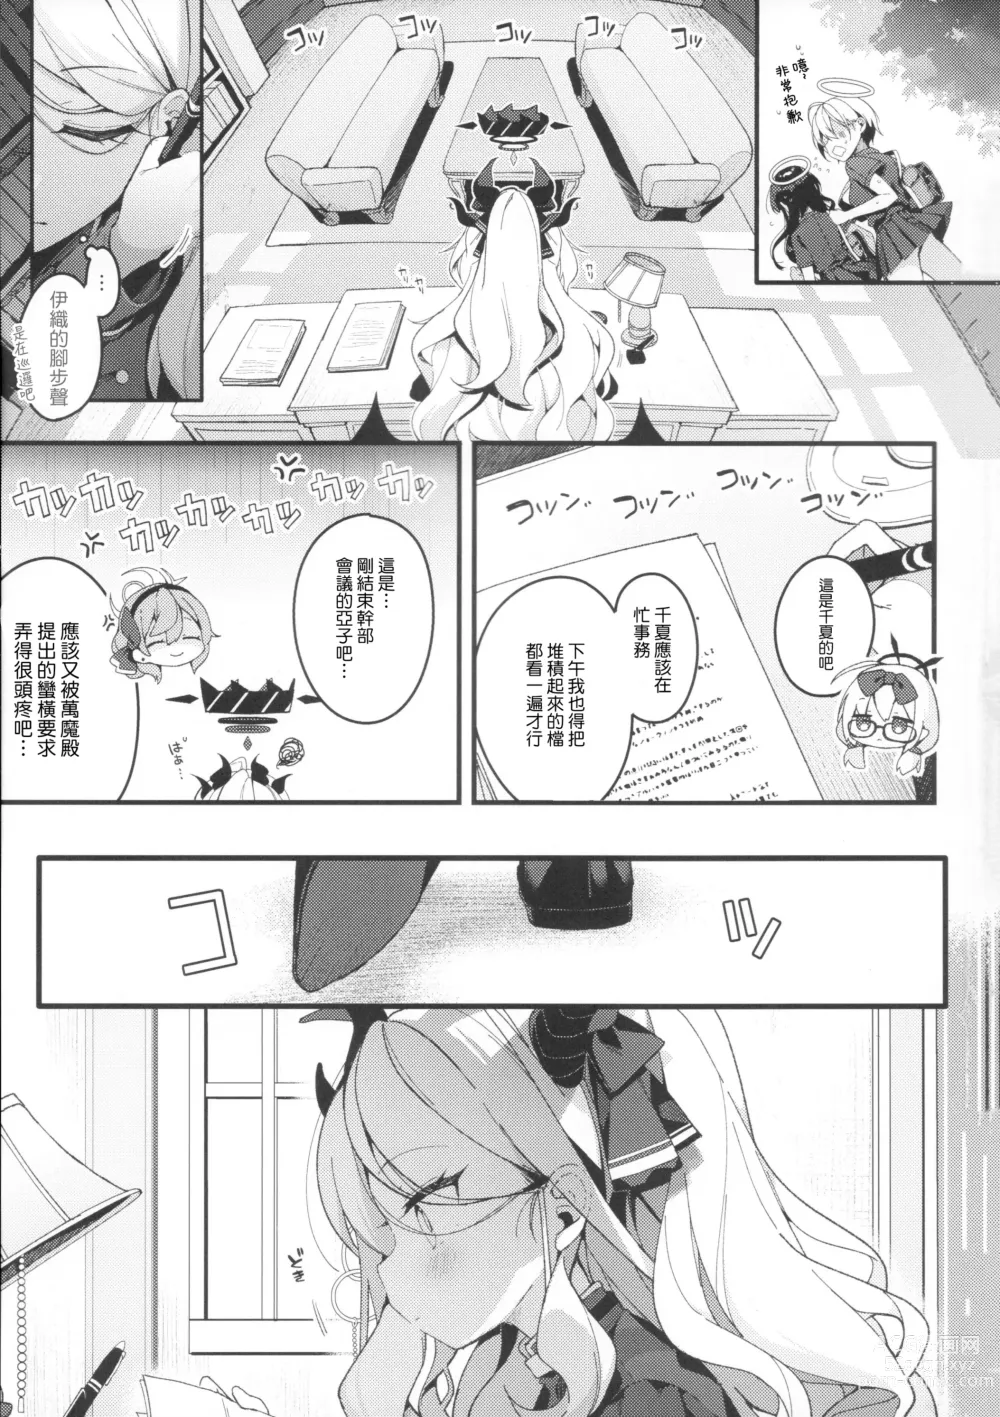 Page 3 of doujinshi 將仲夏之夢留存於那片浪花之中